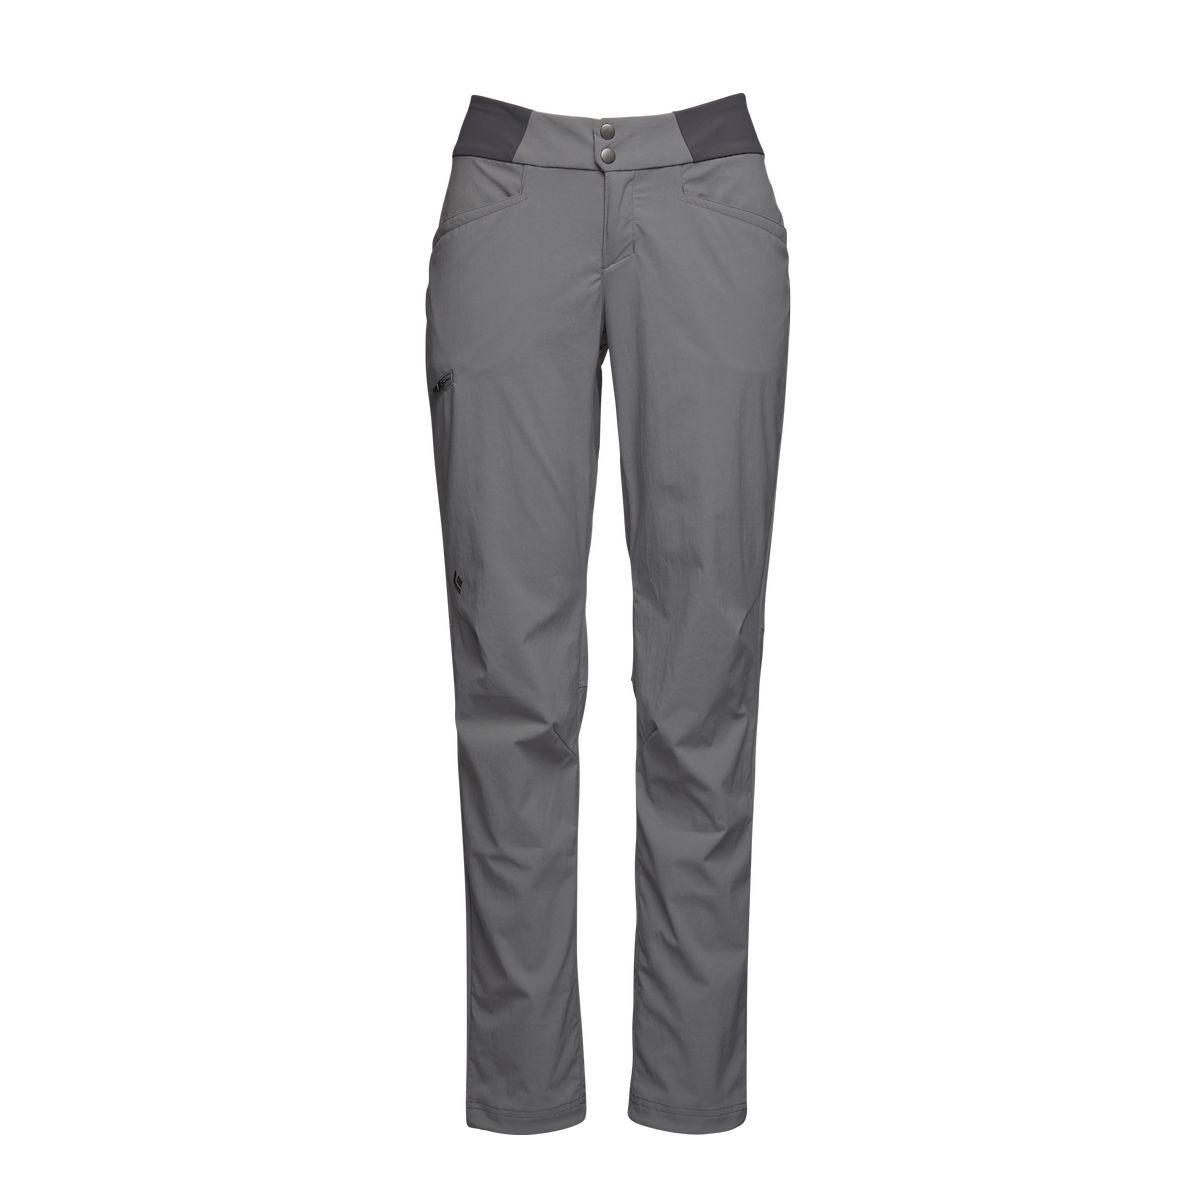 Black Diamond Technician Alpine Pants - Climbing trousers - Women's